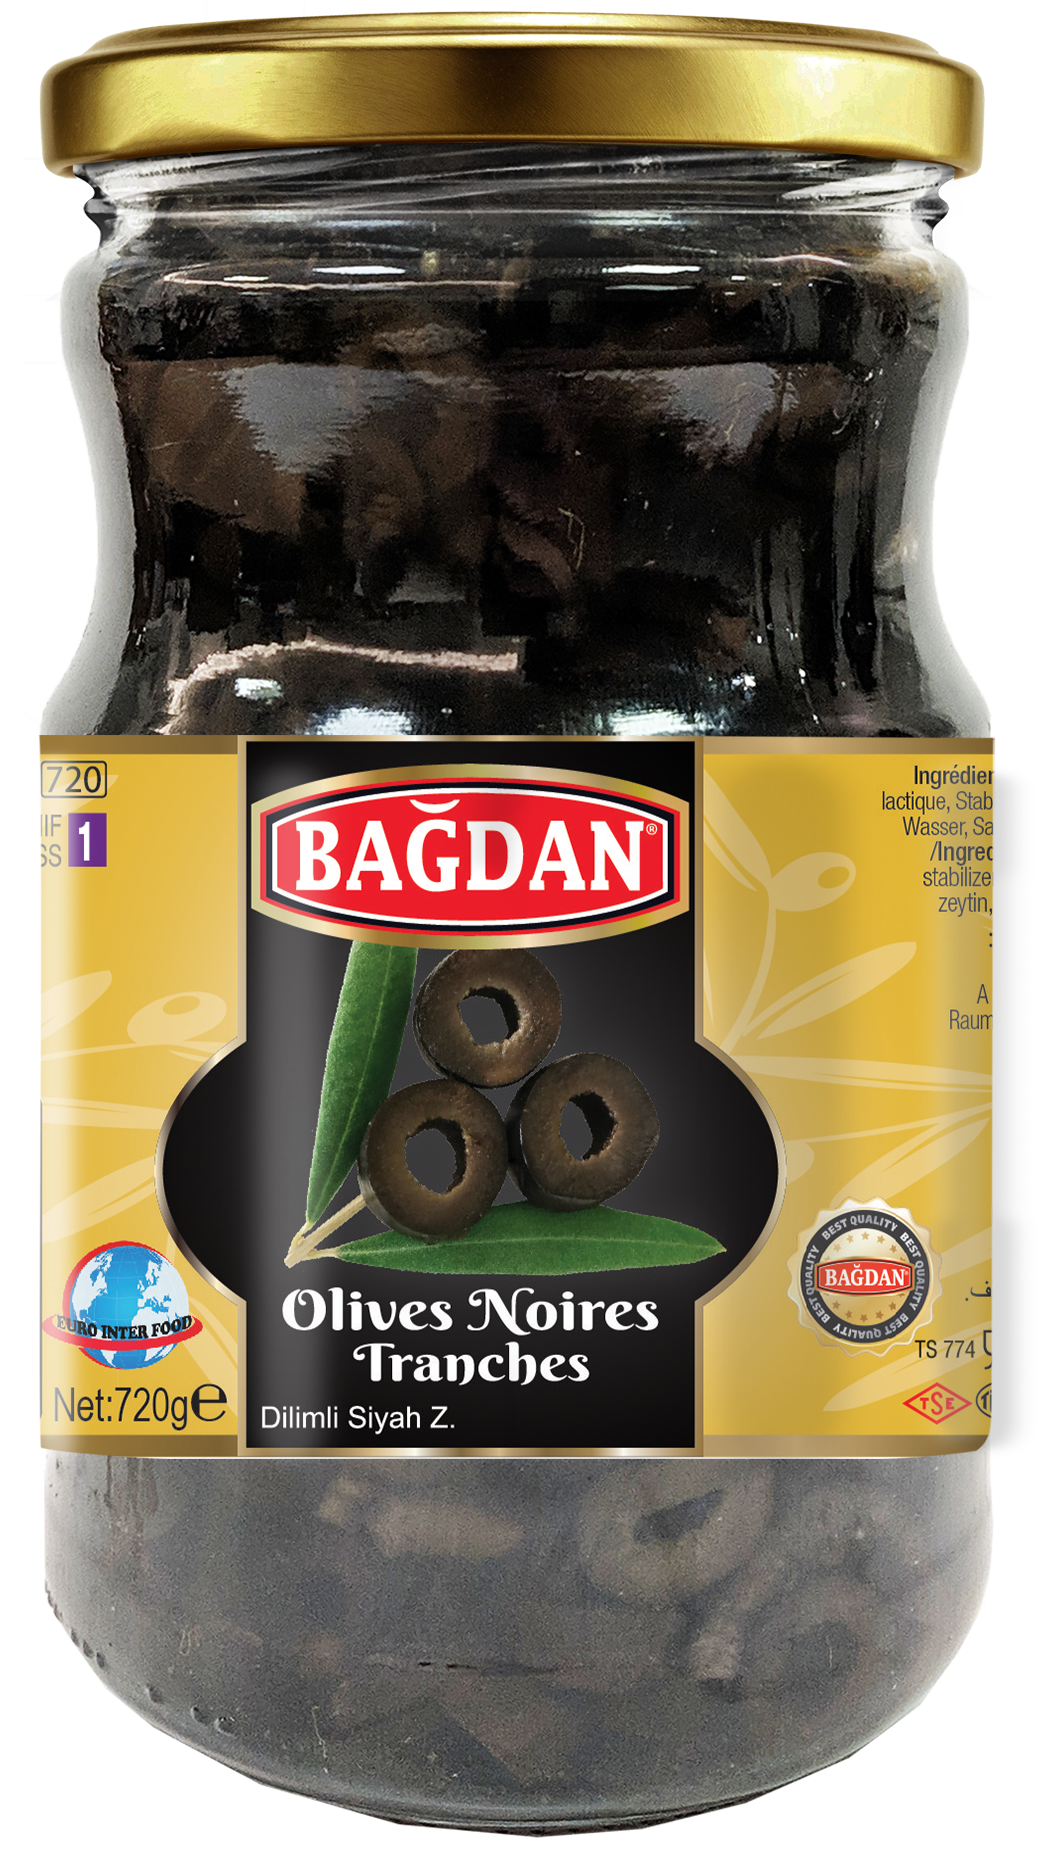 BAGDAN DILIM SIYAH ZEYTIN 370CC (olives noires tranchées)